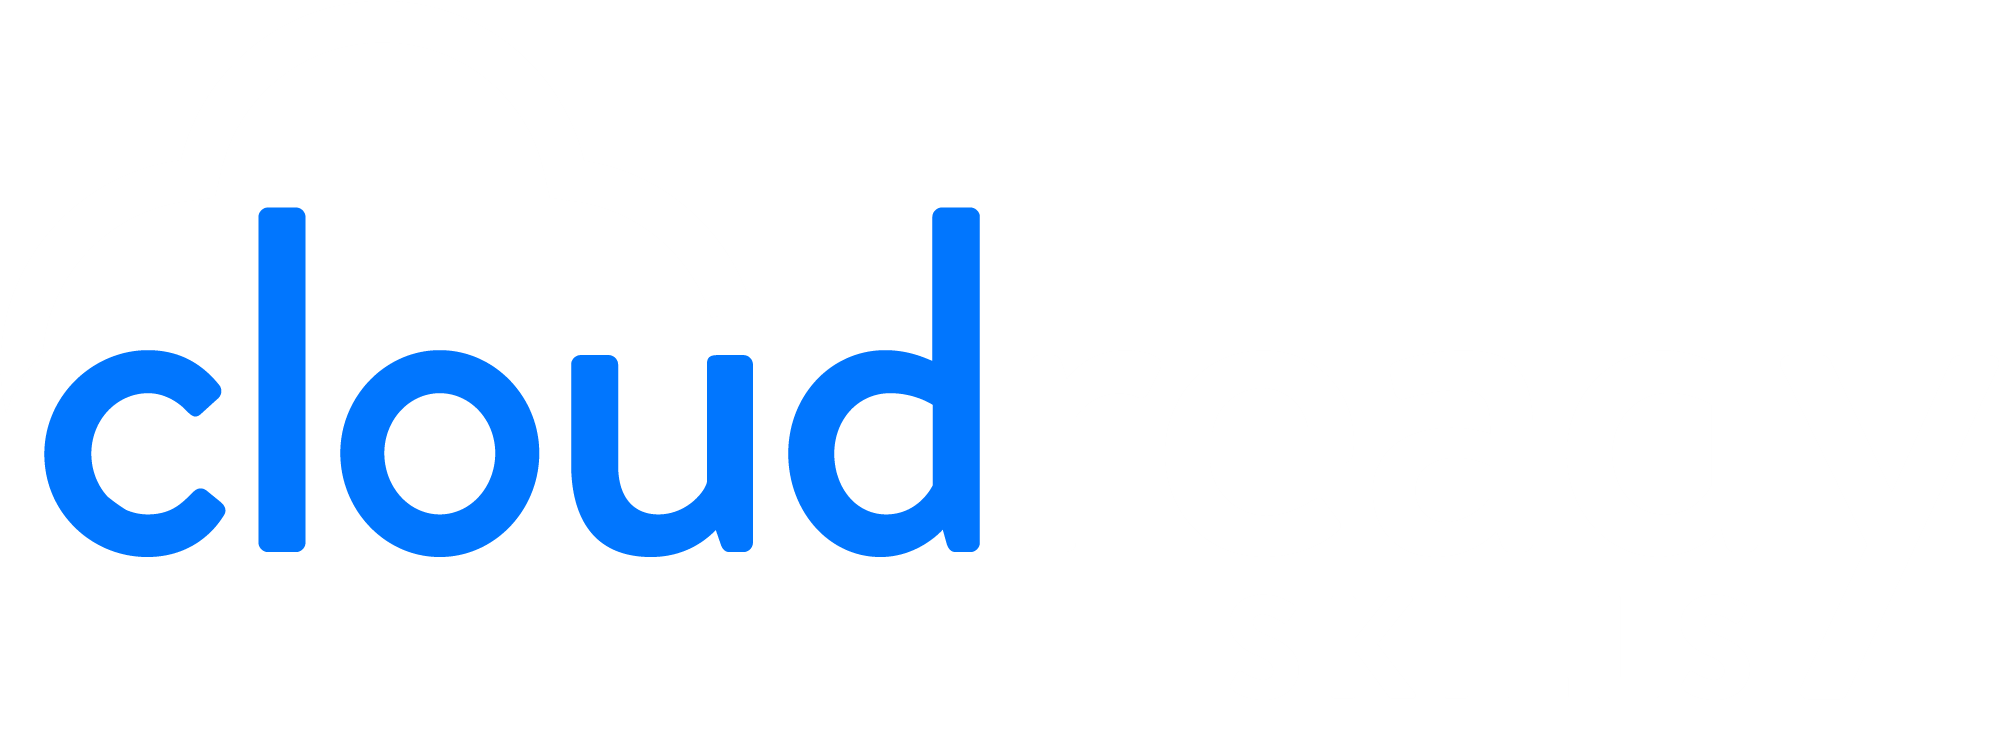 The logo of Cloud Ready Skills